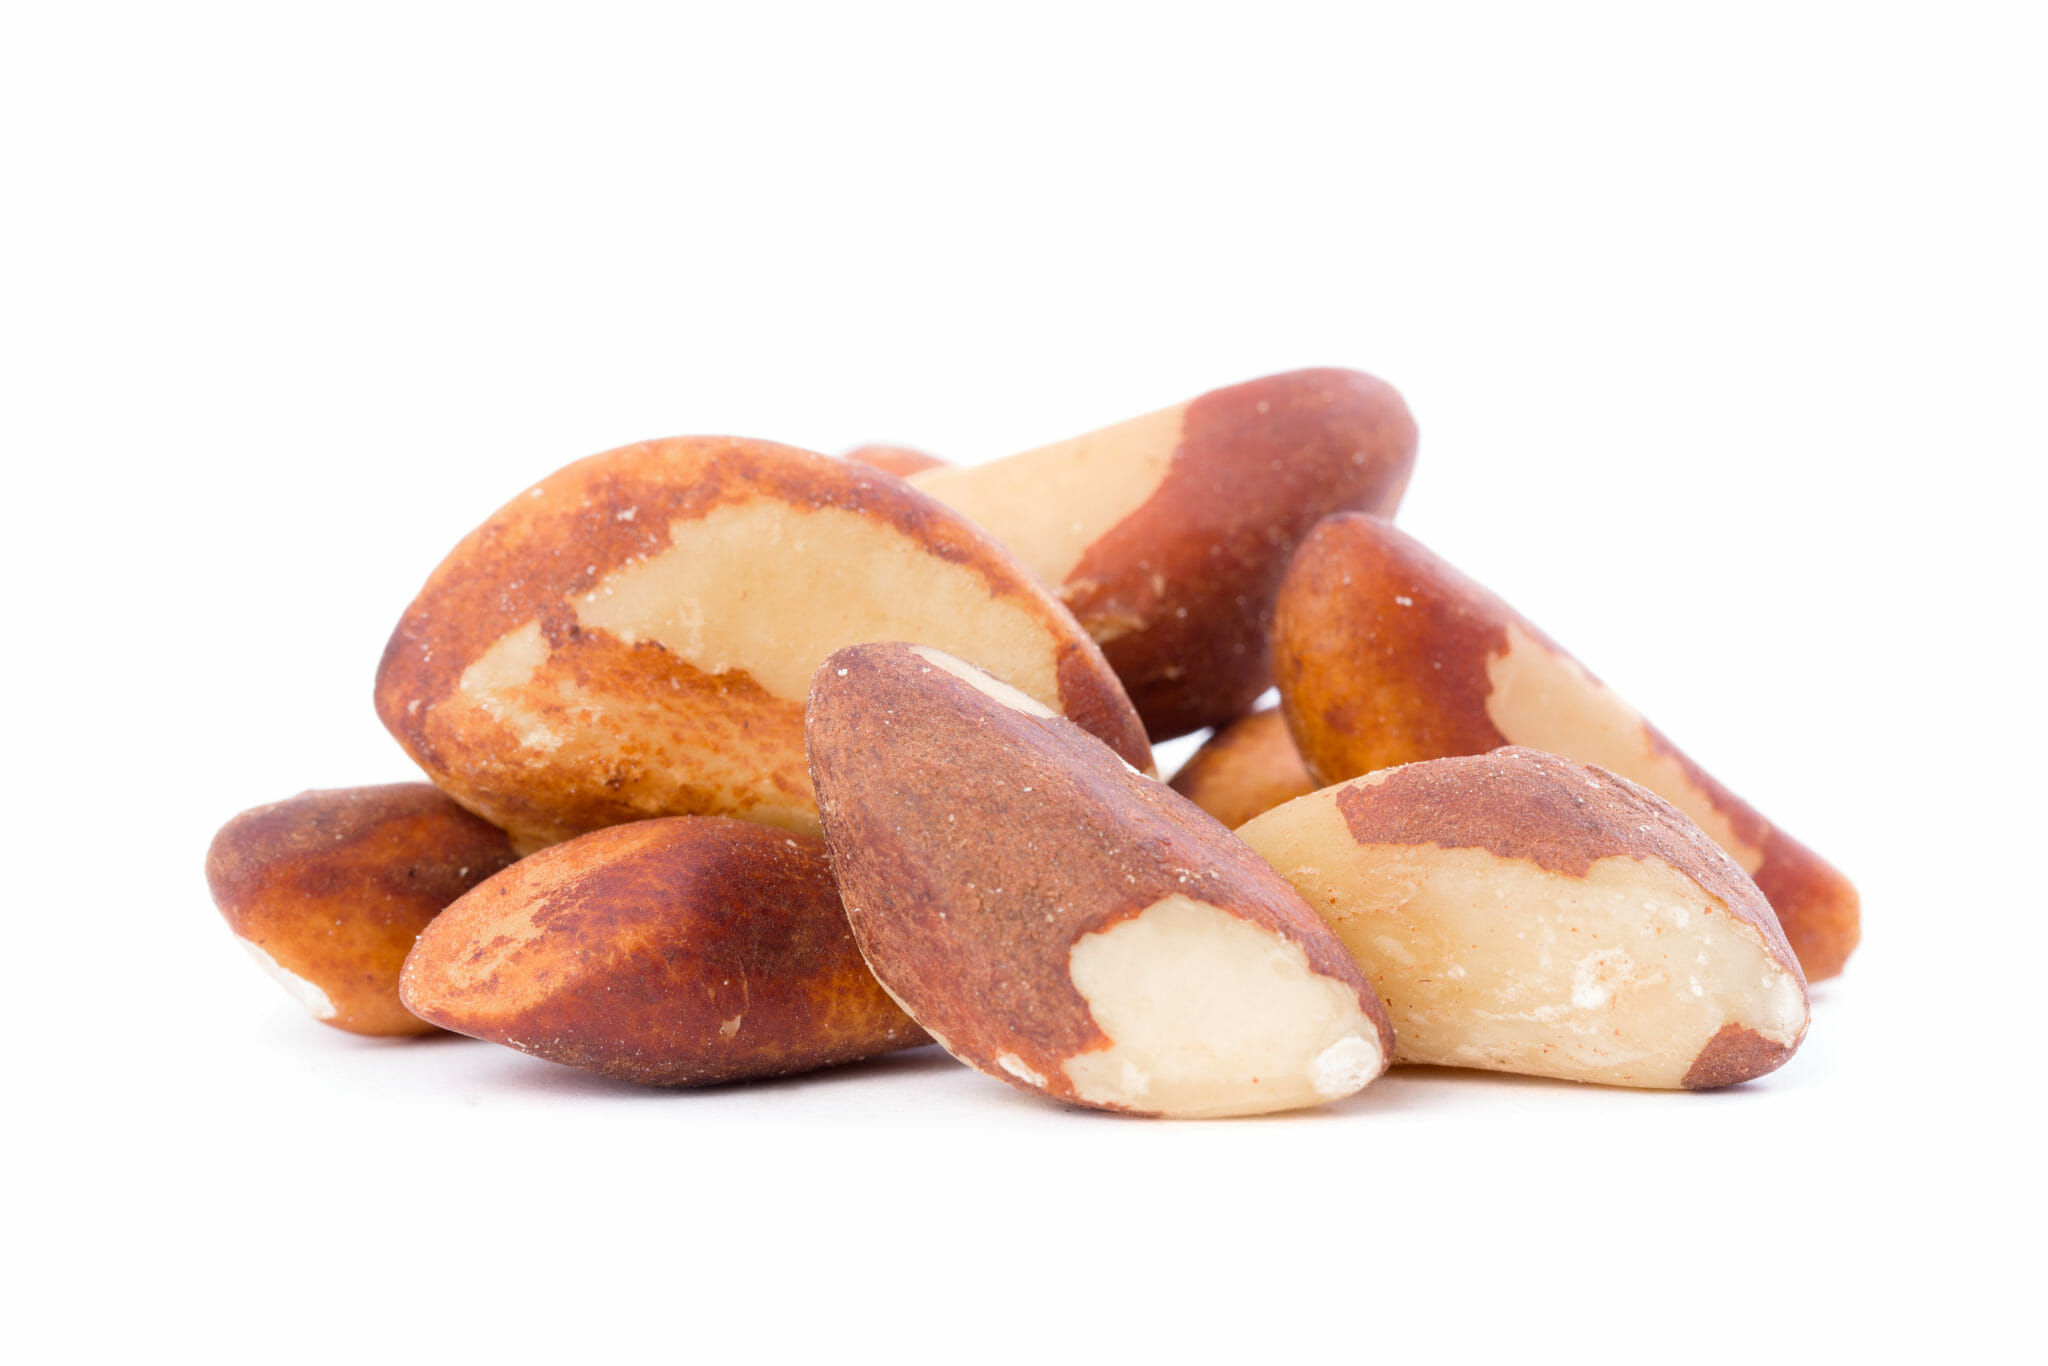 Fresh Brazilian nuts